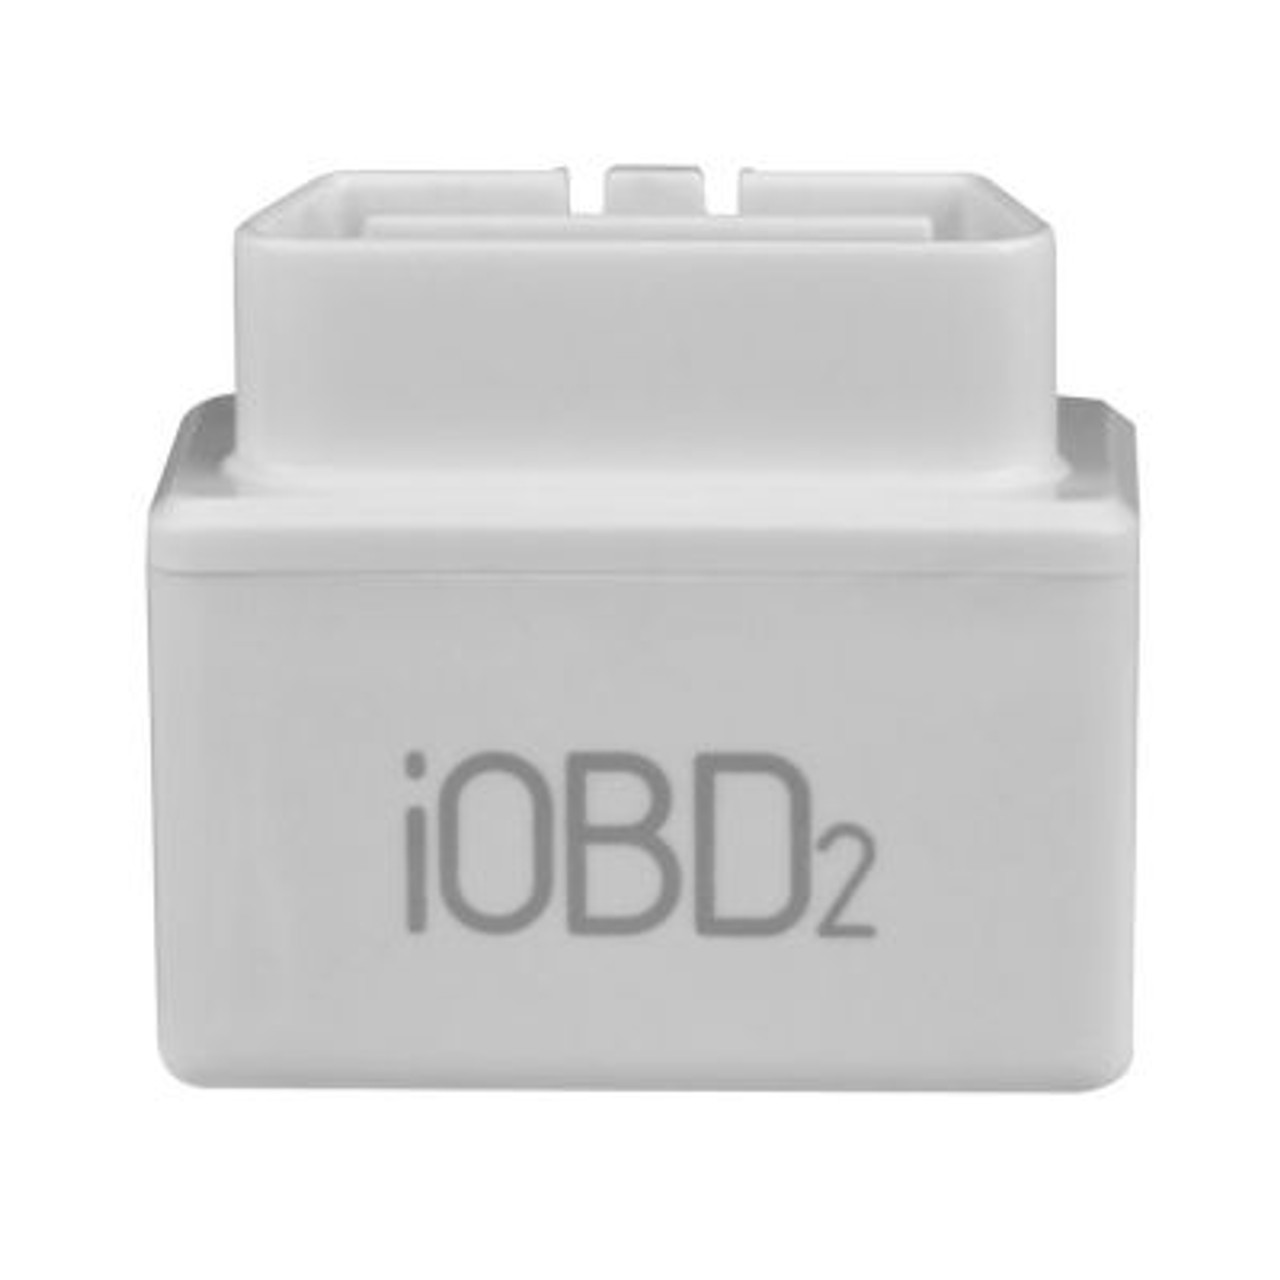 iOBD2 Bluetooth Code Reader